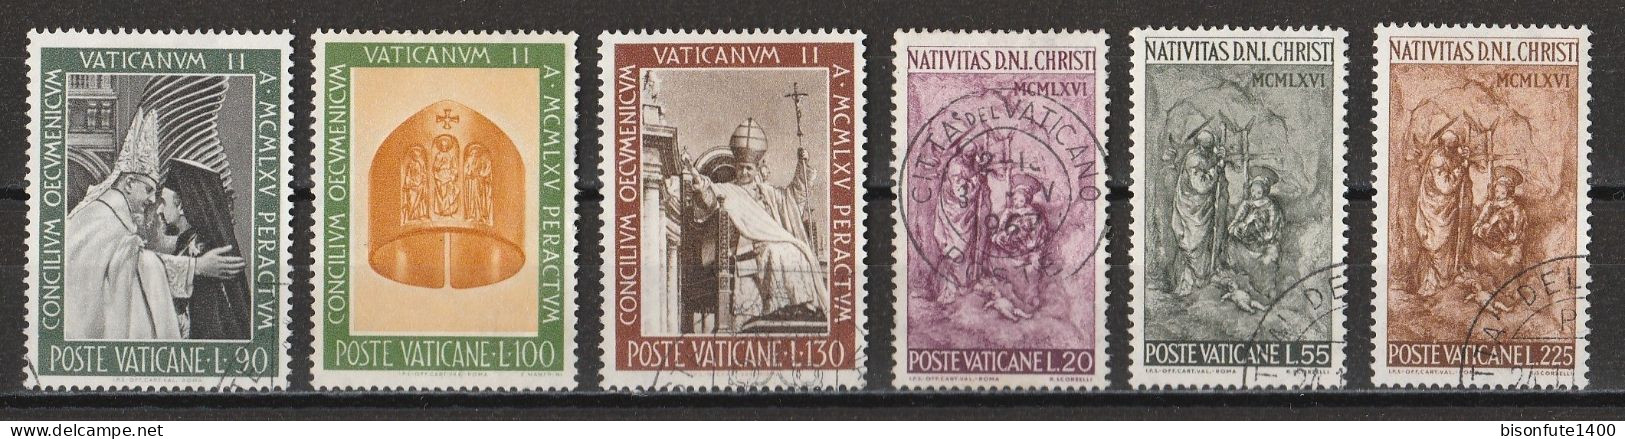 Vatican 1966 : Timbres Yvert & Tellier N° 451 - 452 - 453 - 454 - 455 - 456 - 457 - 458 - 459 - 460 - 461 - 462 -....... - Gebraucht